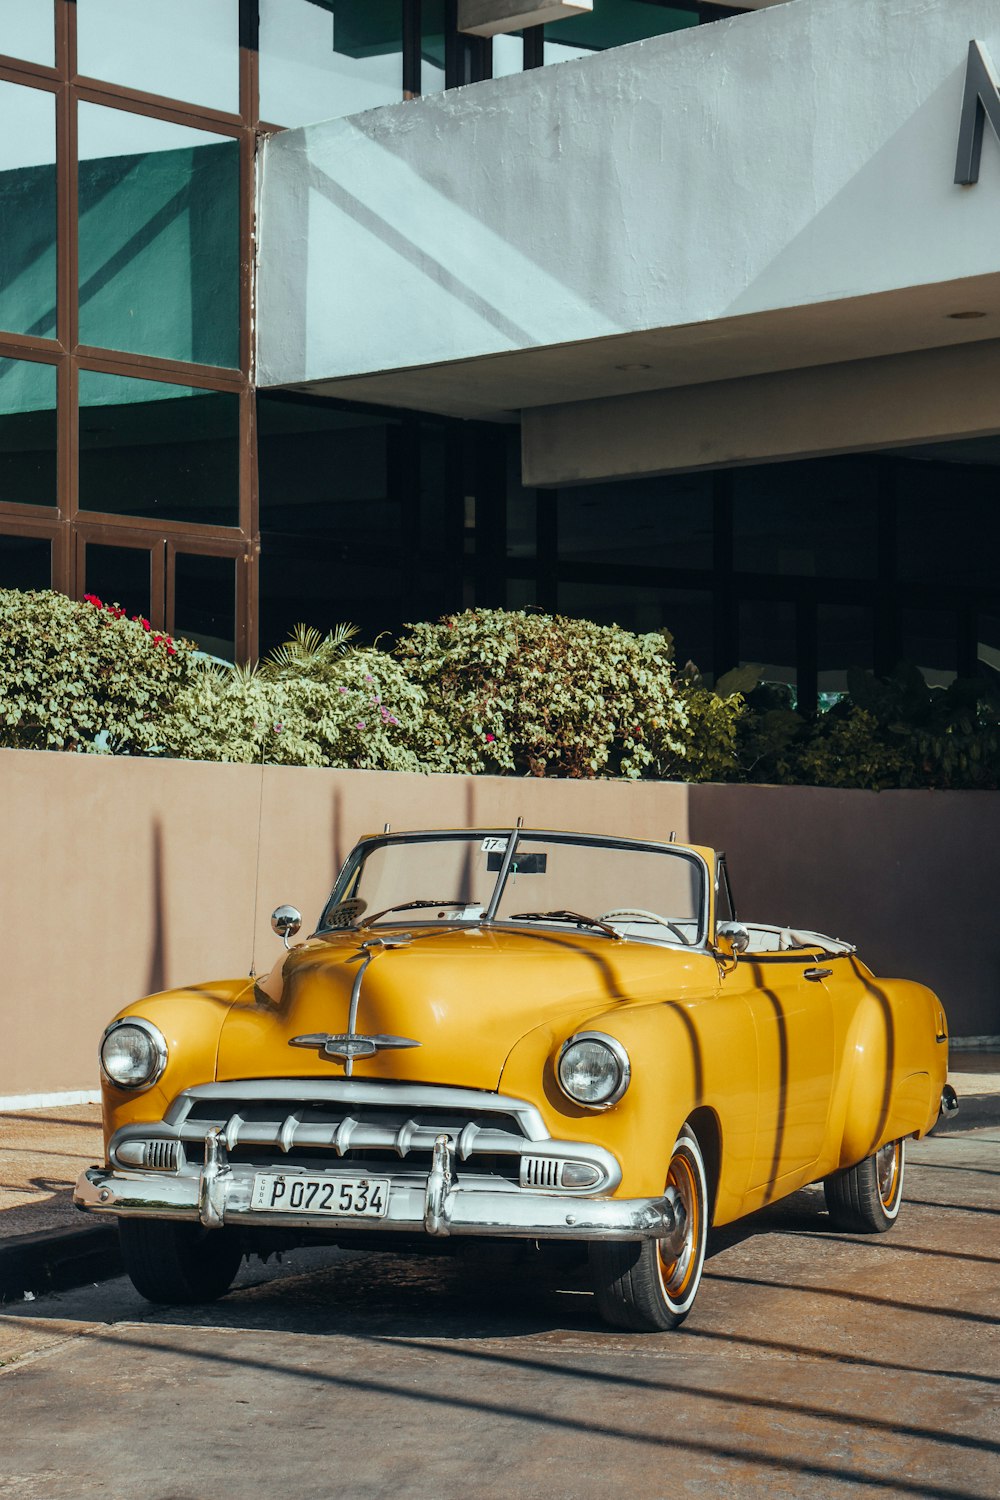 an old yellow car